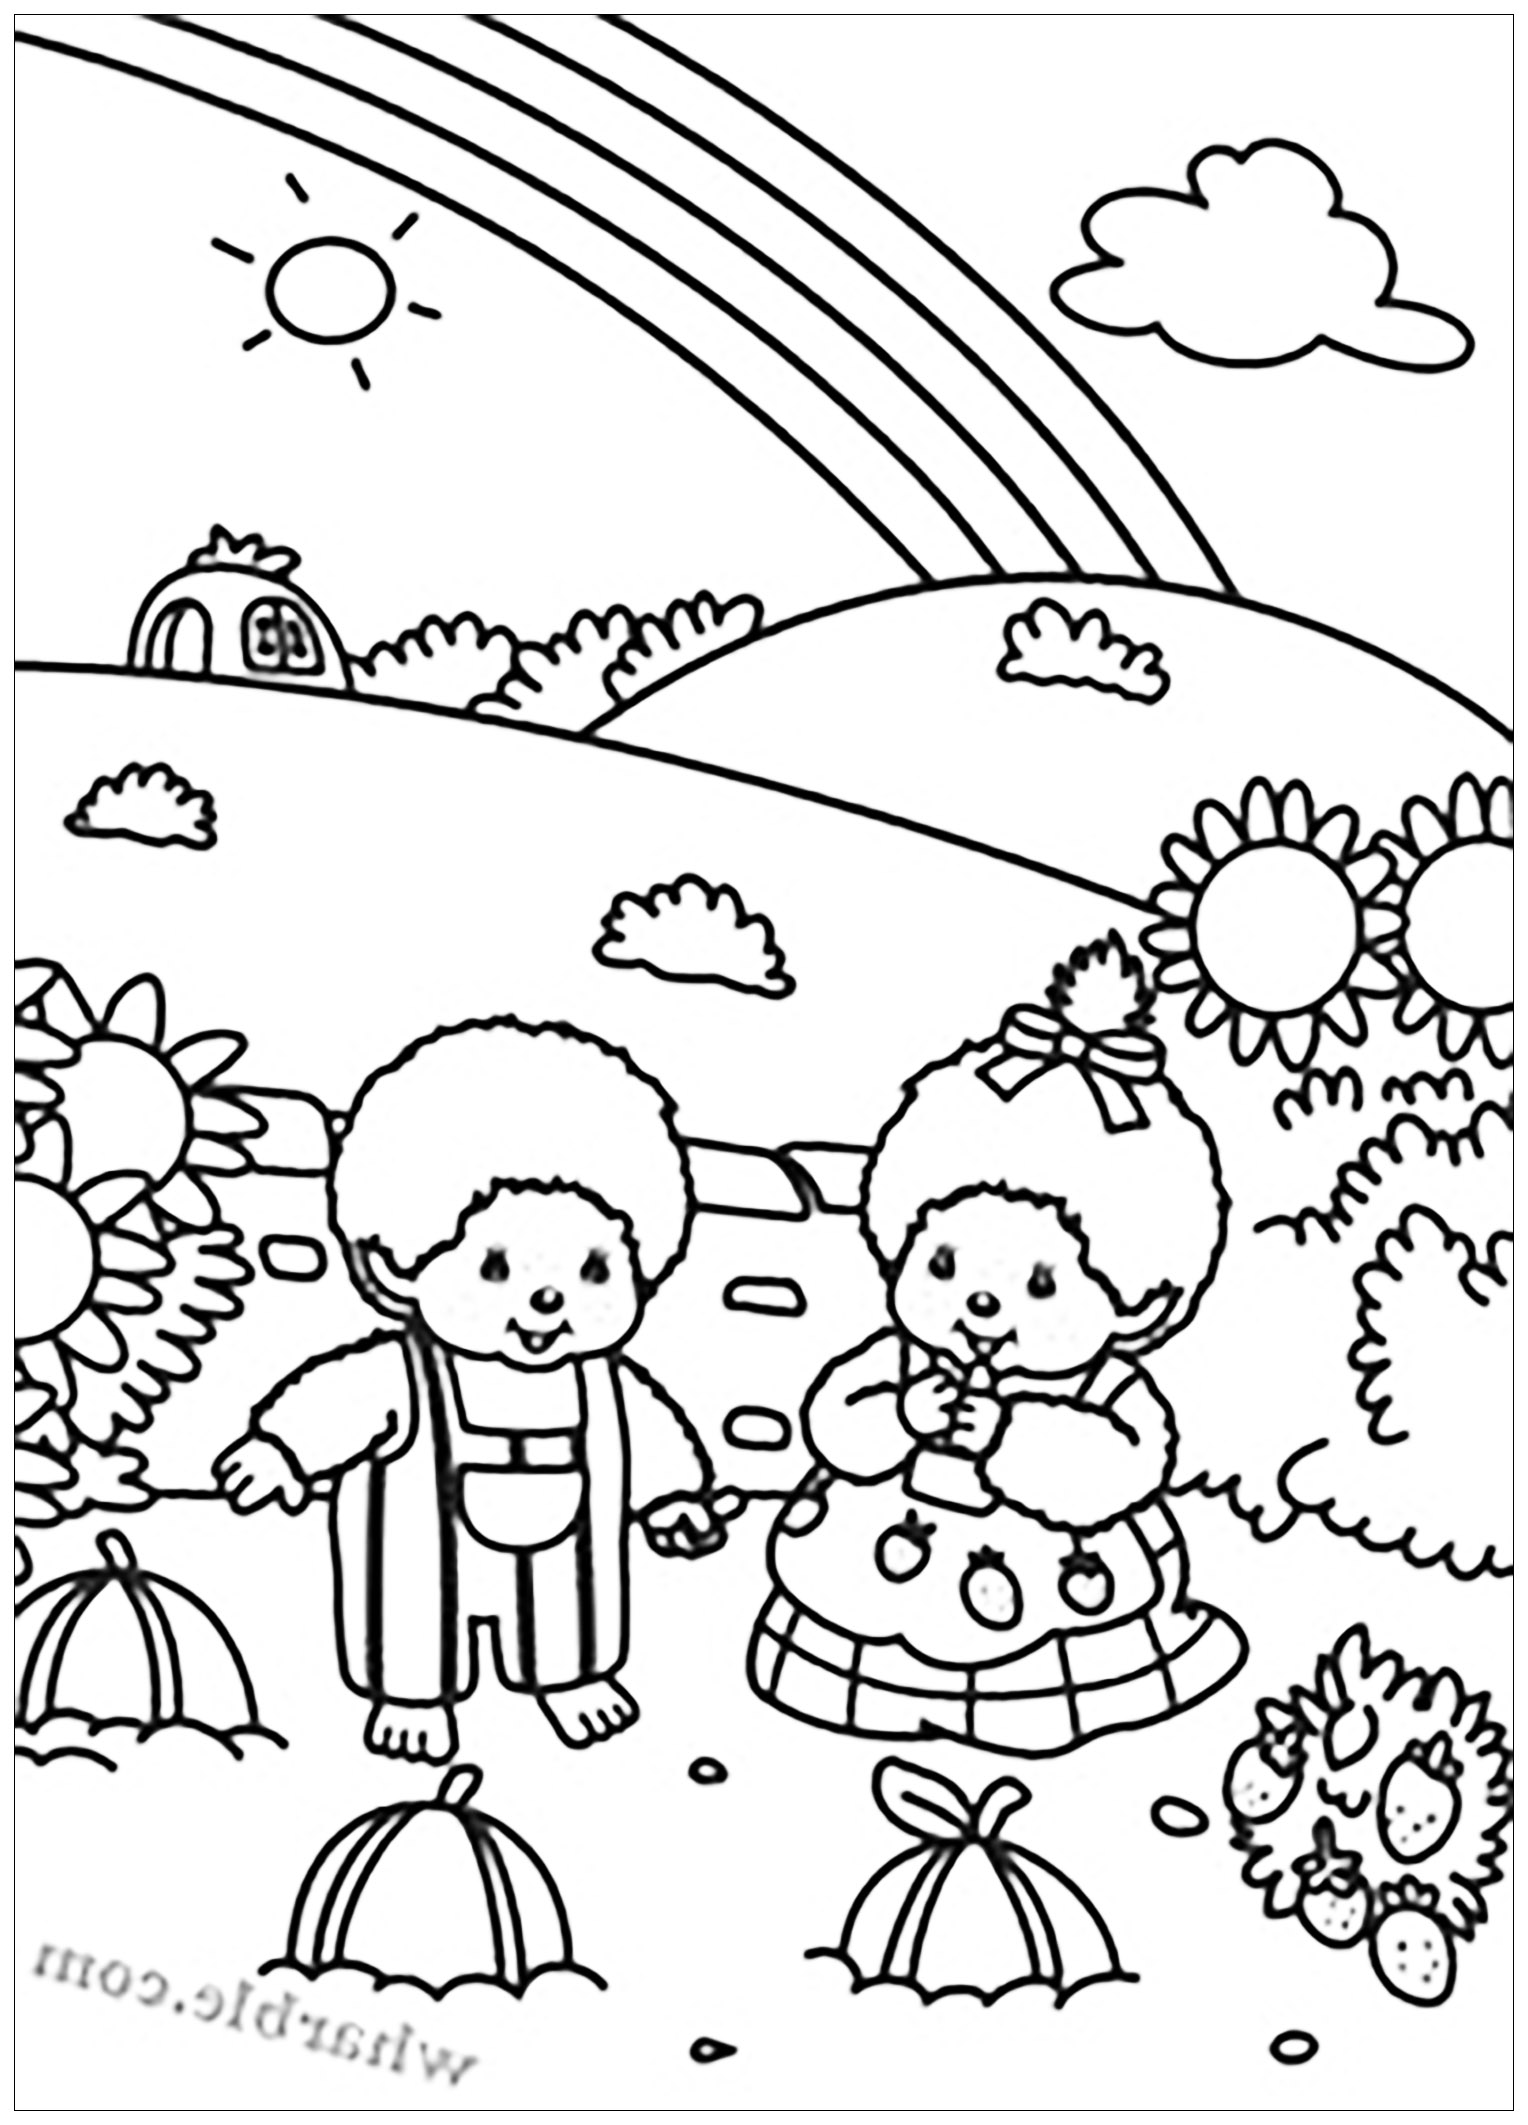 Desenhos de Rainbow Friends para colorir  Páginas para colorir gratuitas,  Colorir, Desenhos para colorir